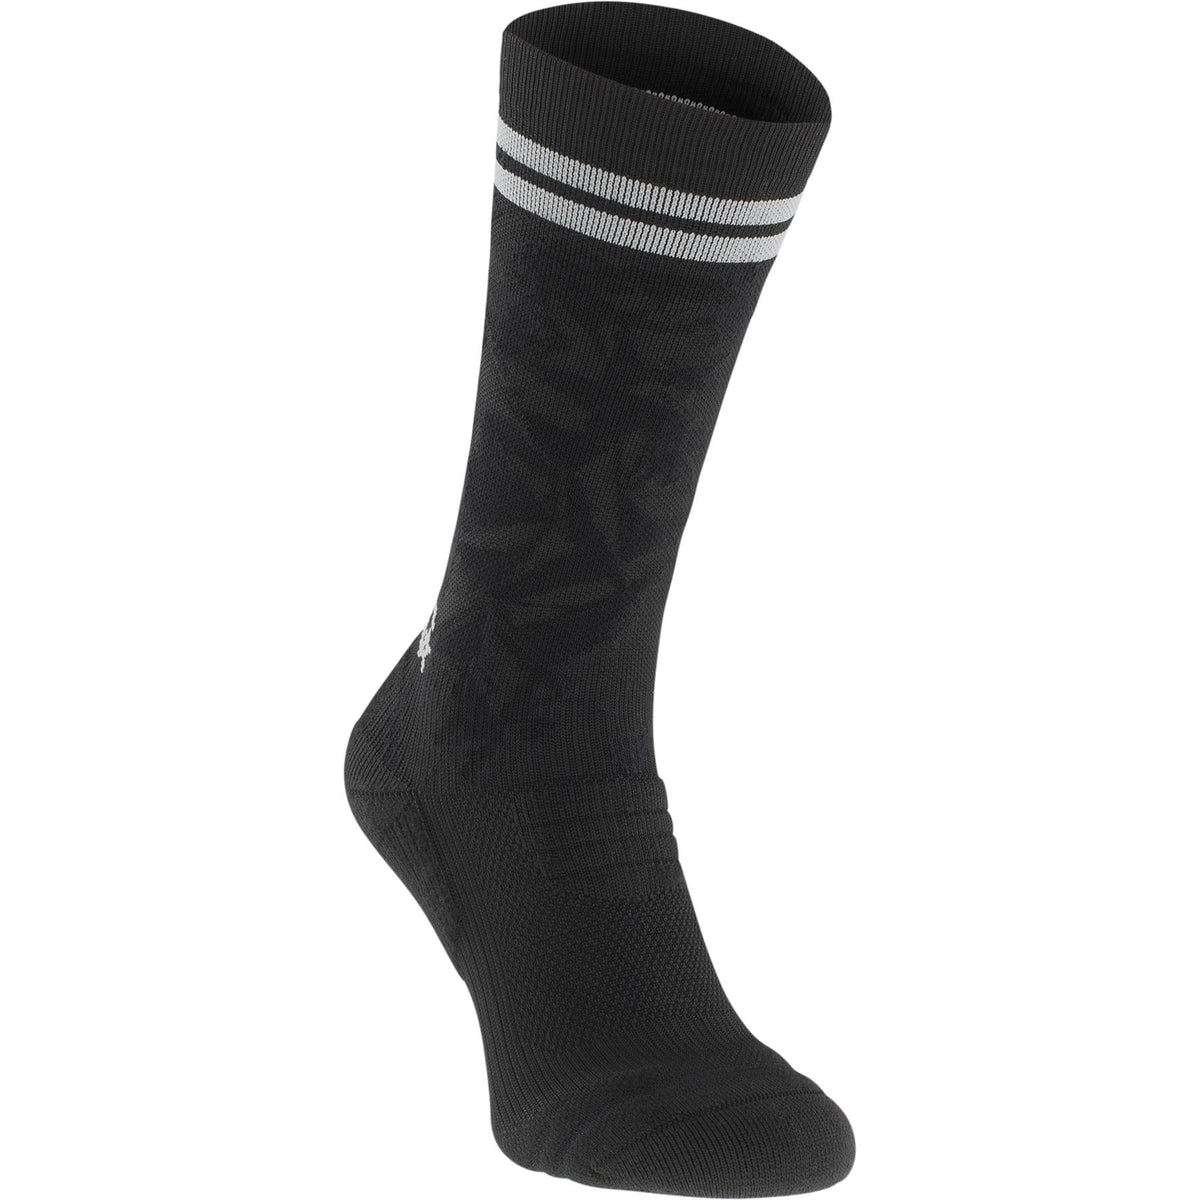 Evoc Socks Medium Black L/XL (10 - 13)